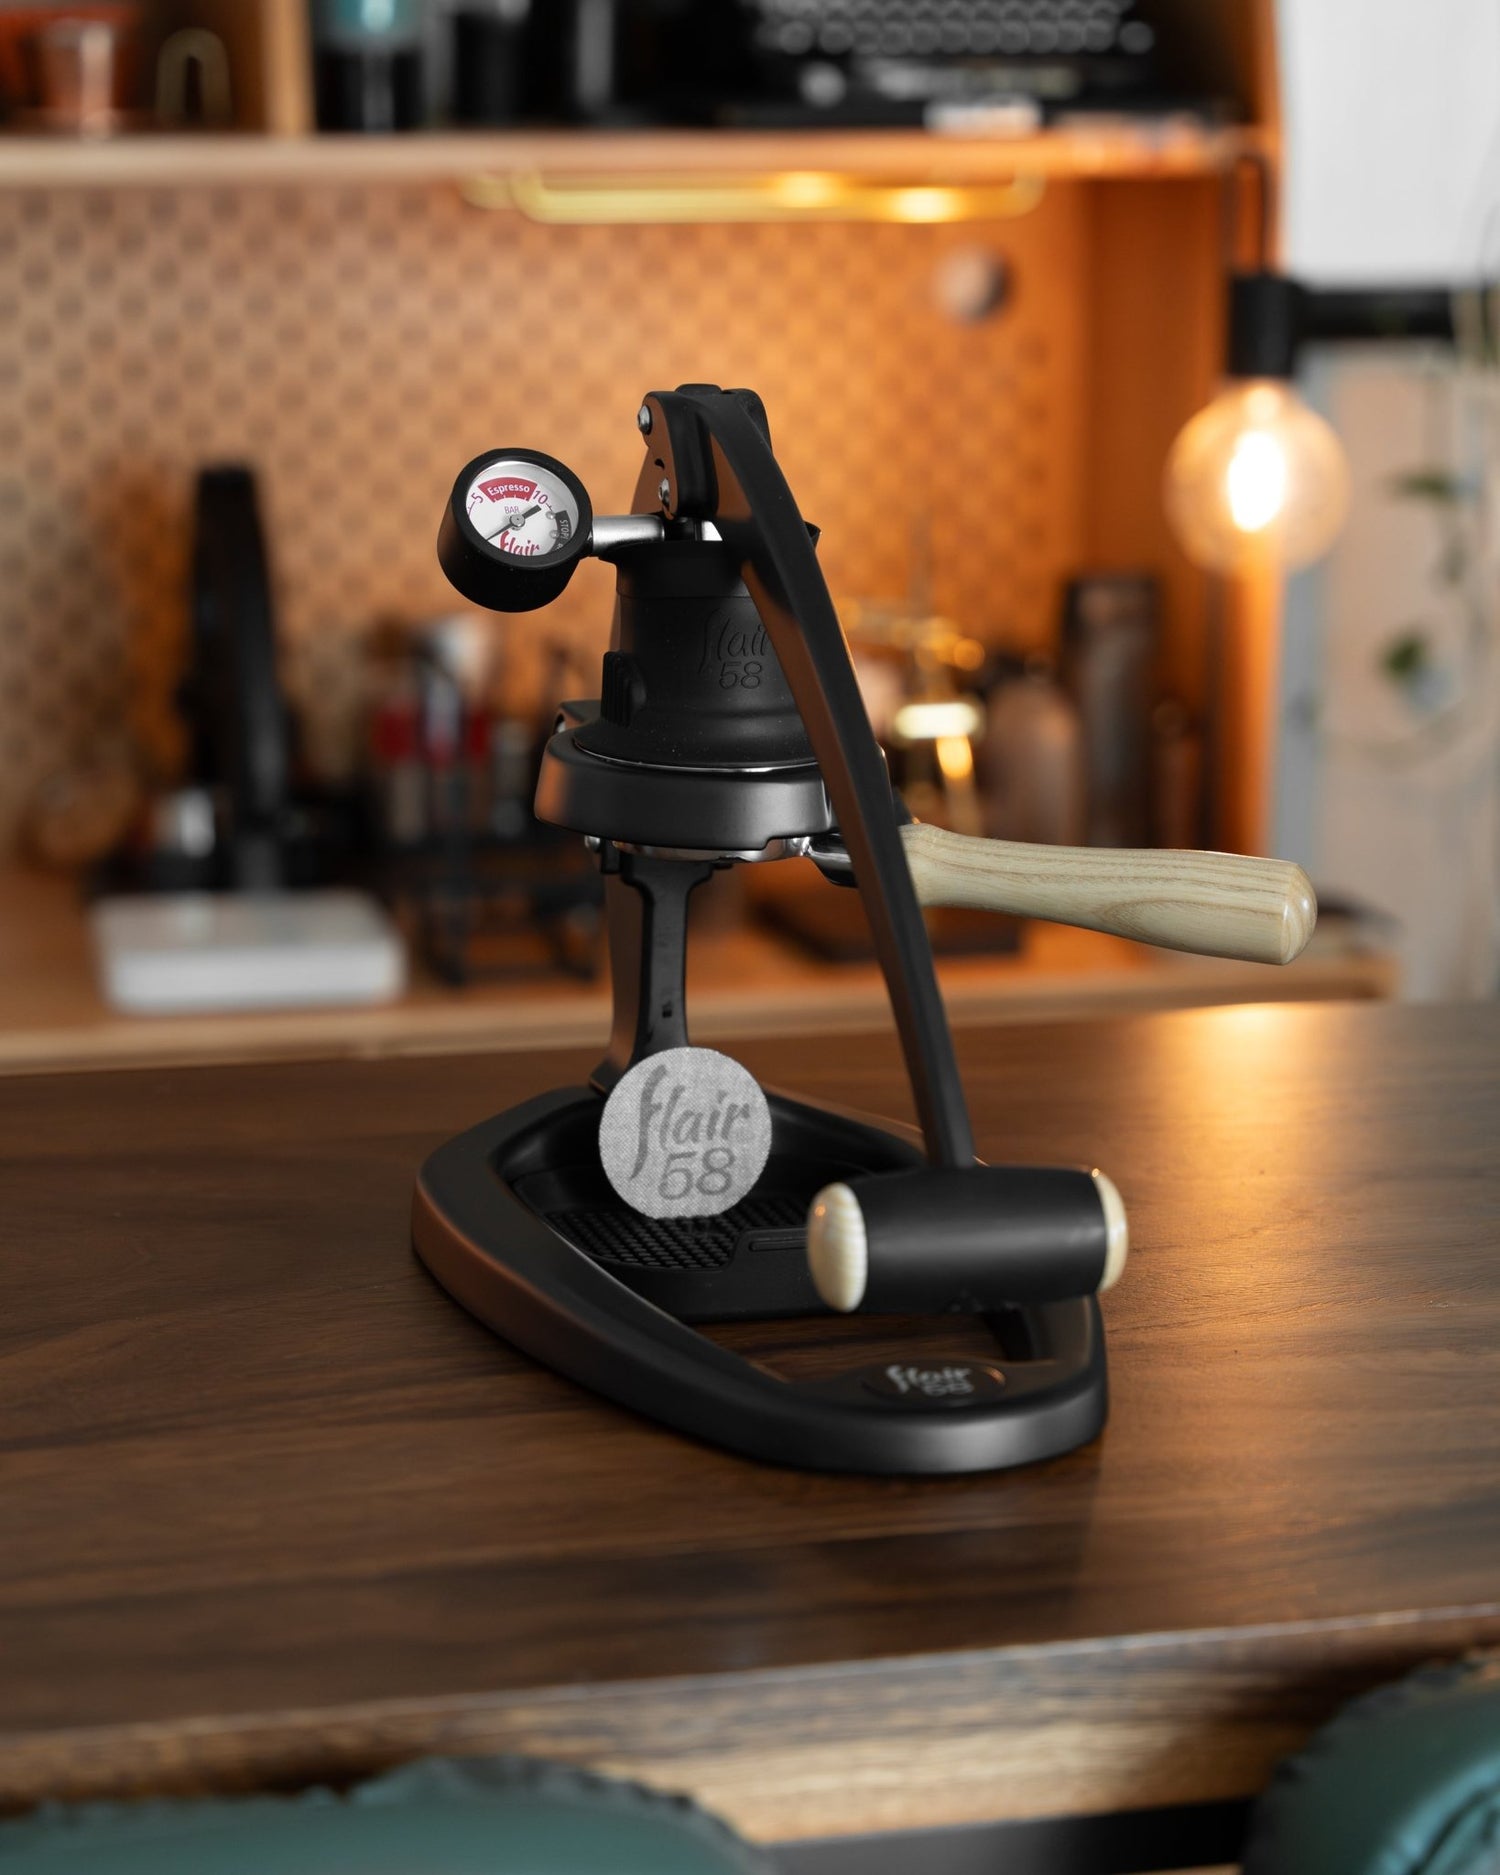 Flair 58 - 結合美觀與功能的手壓濃縮咖啡機詳細分享